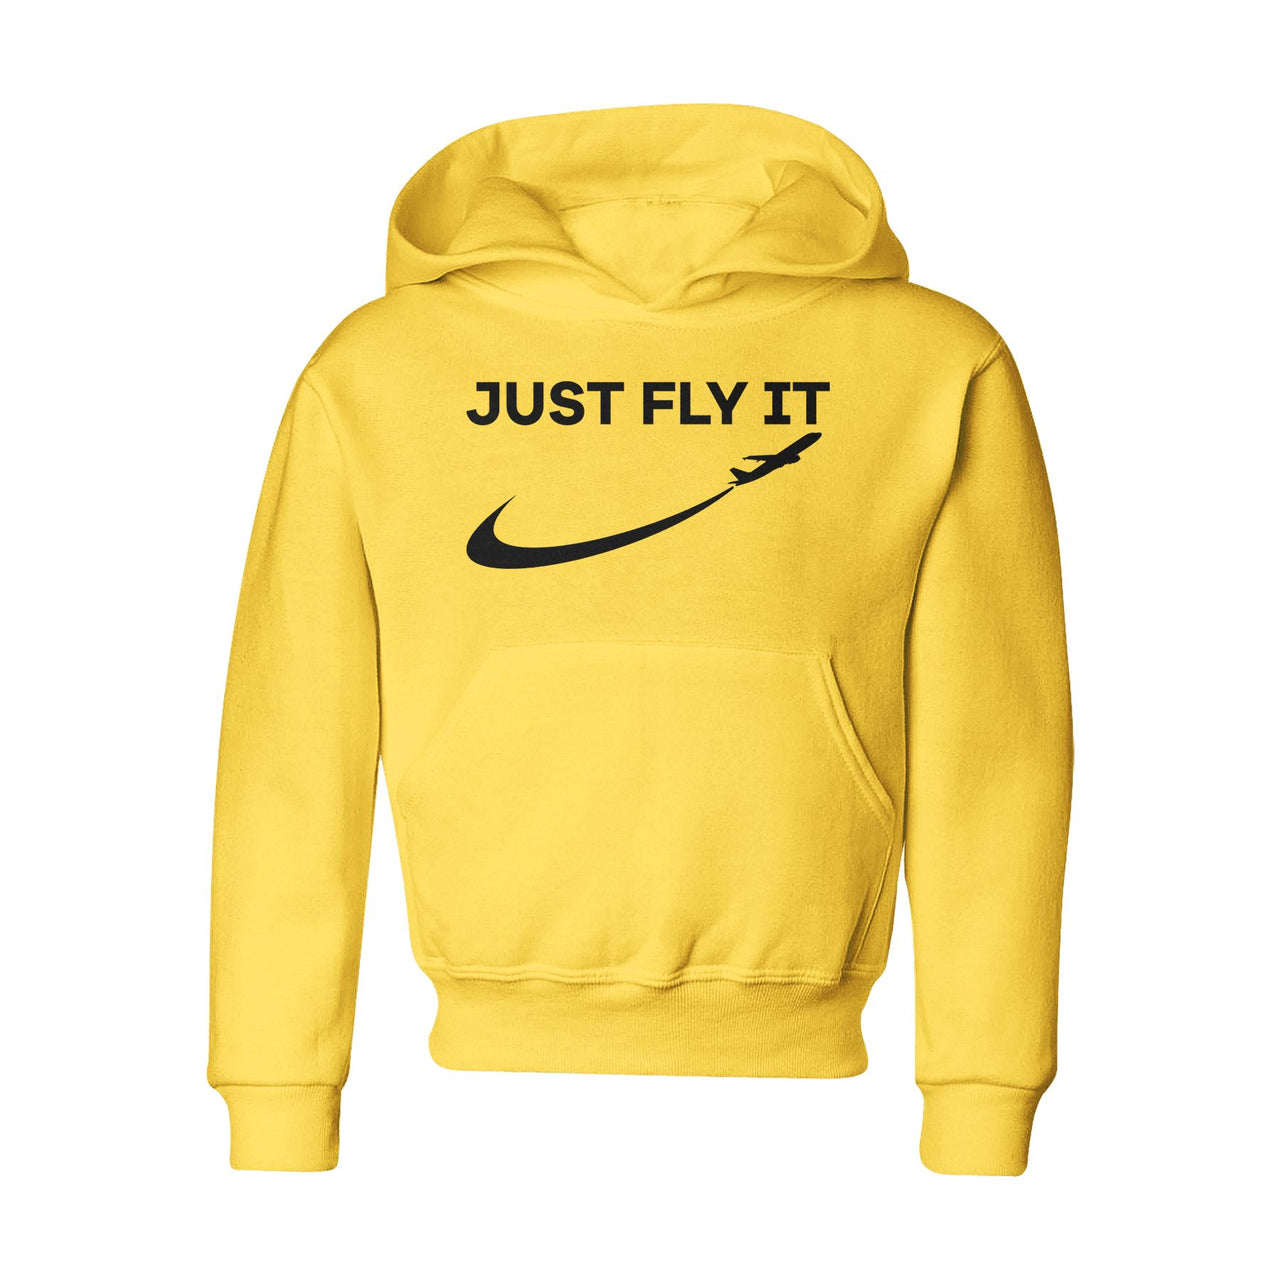 Just Fly It 2 Designed "CHILDREN" Hoodies